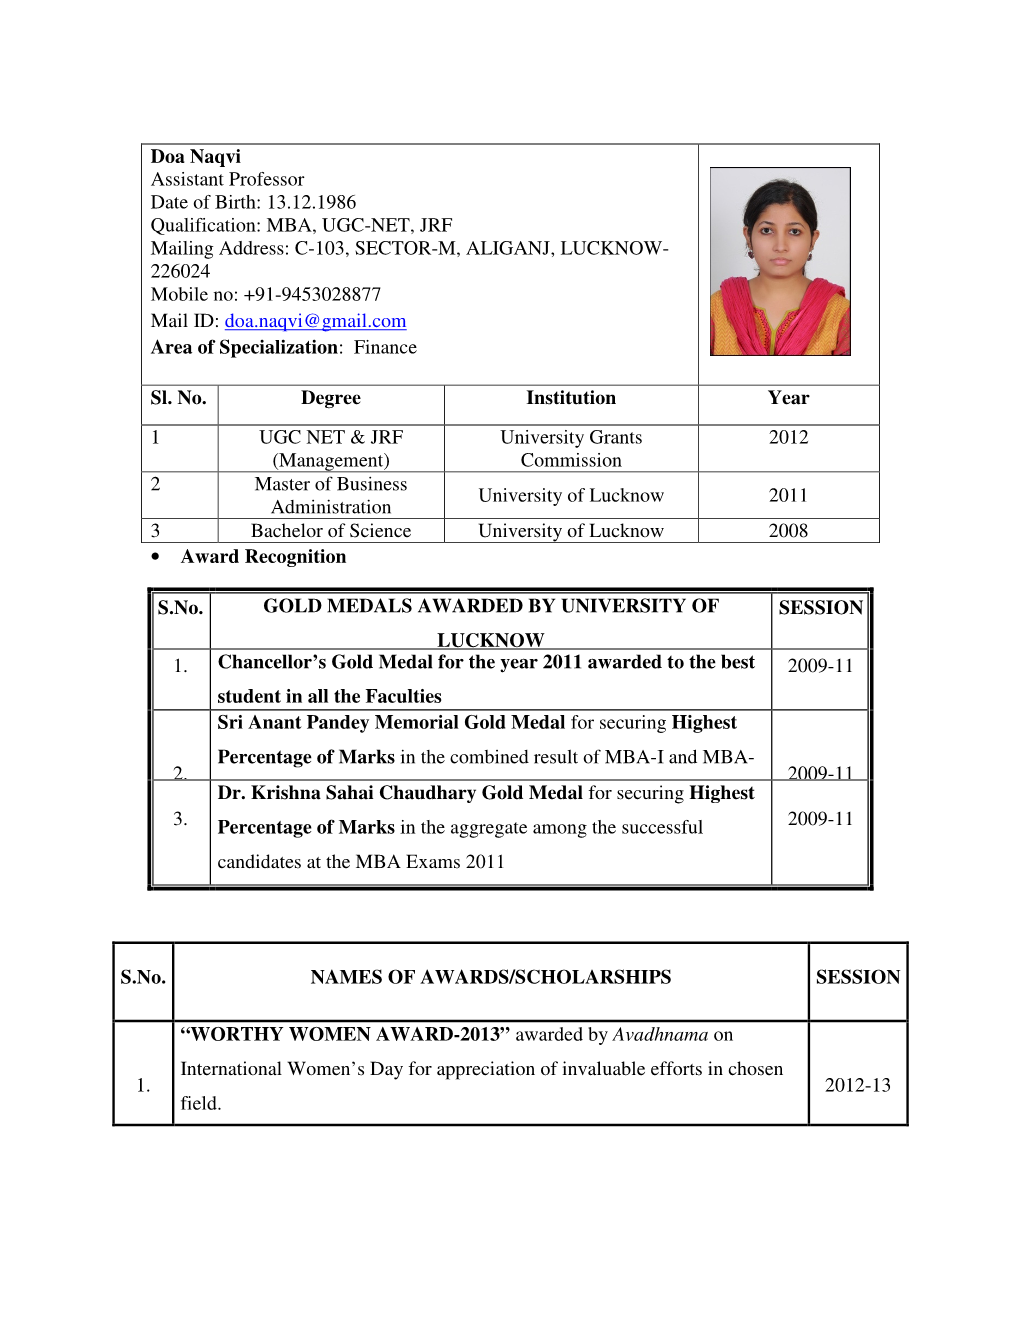 Doa Naqvi Assistant Professor Date of Birth: 13.12.1986 Qualification